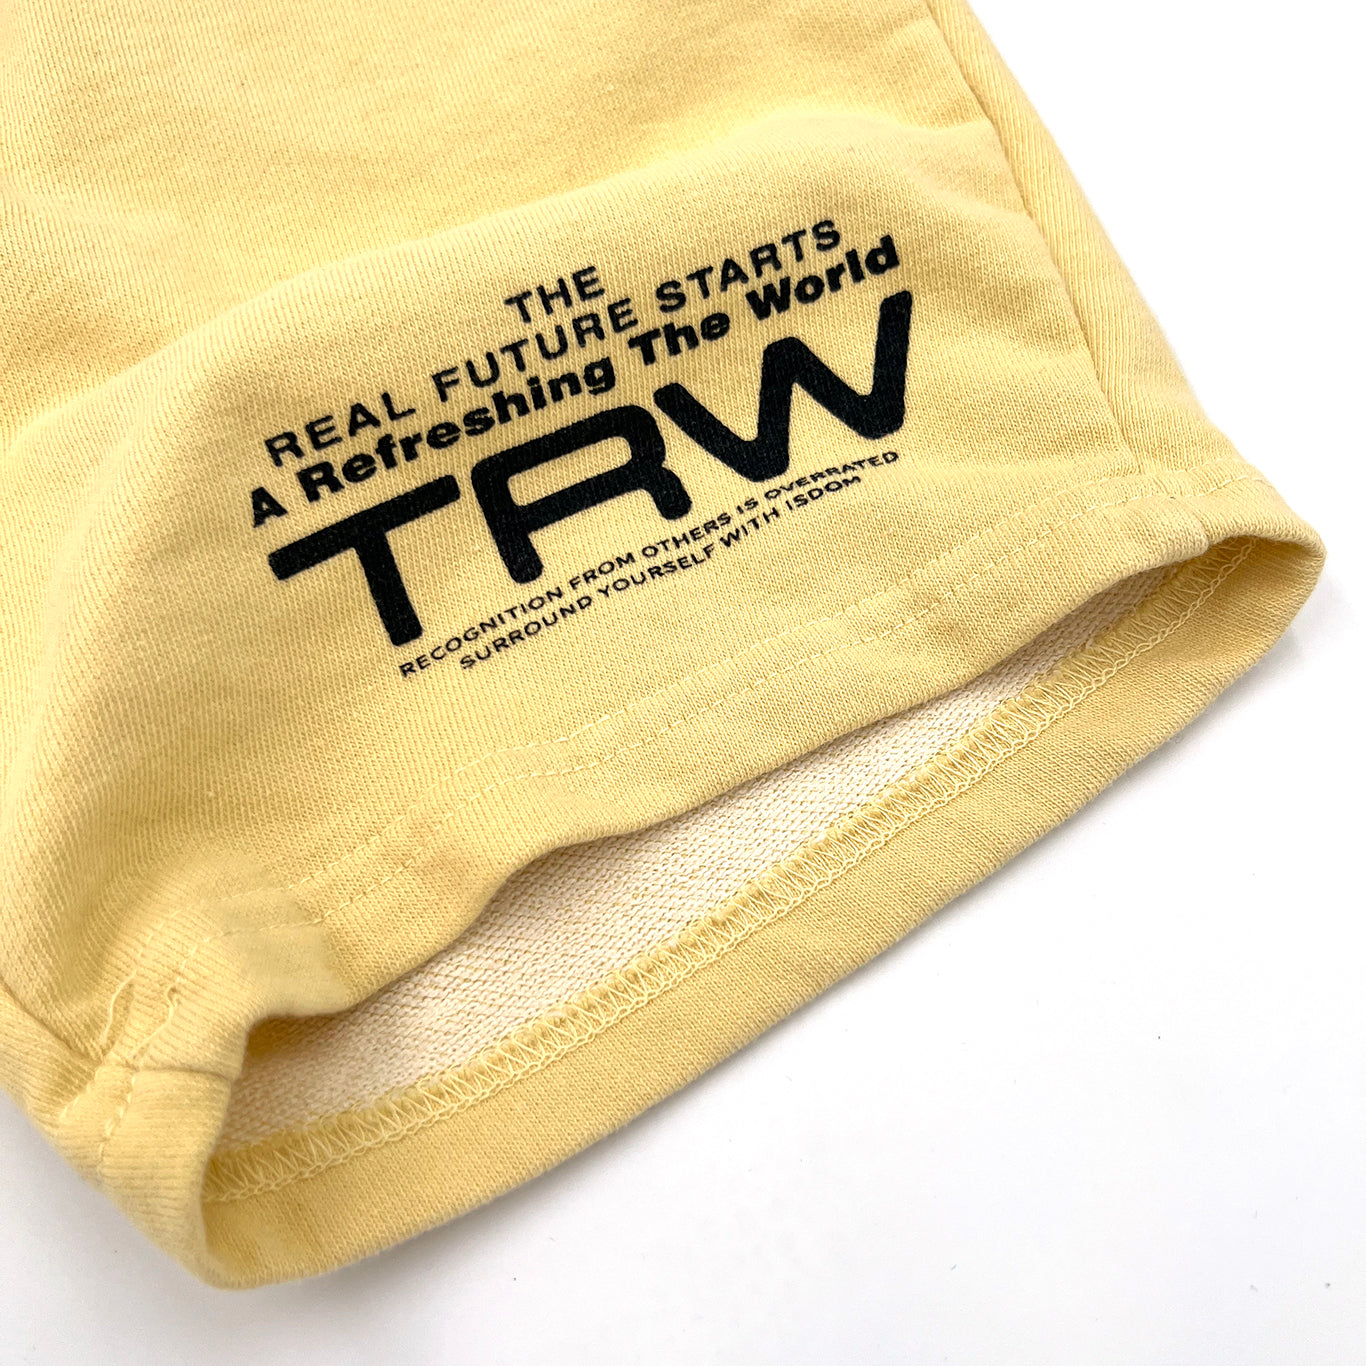 TRW Fleece Shorts